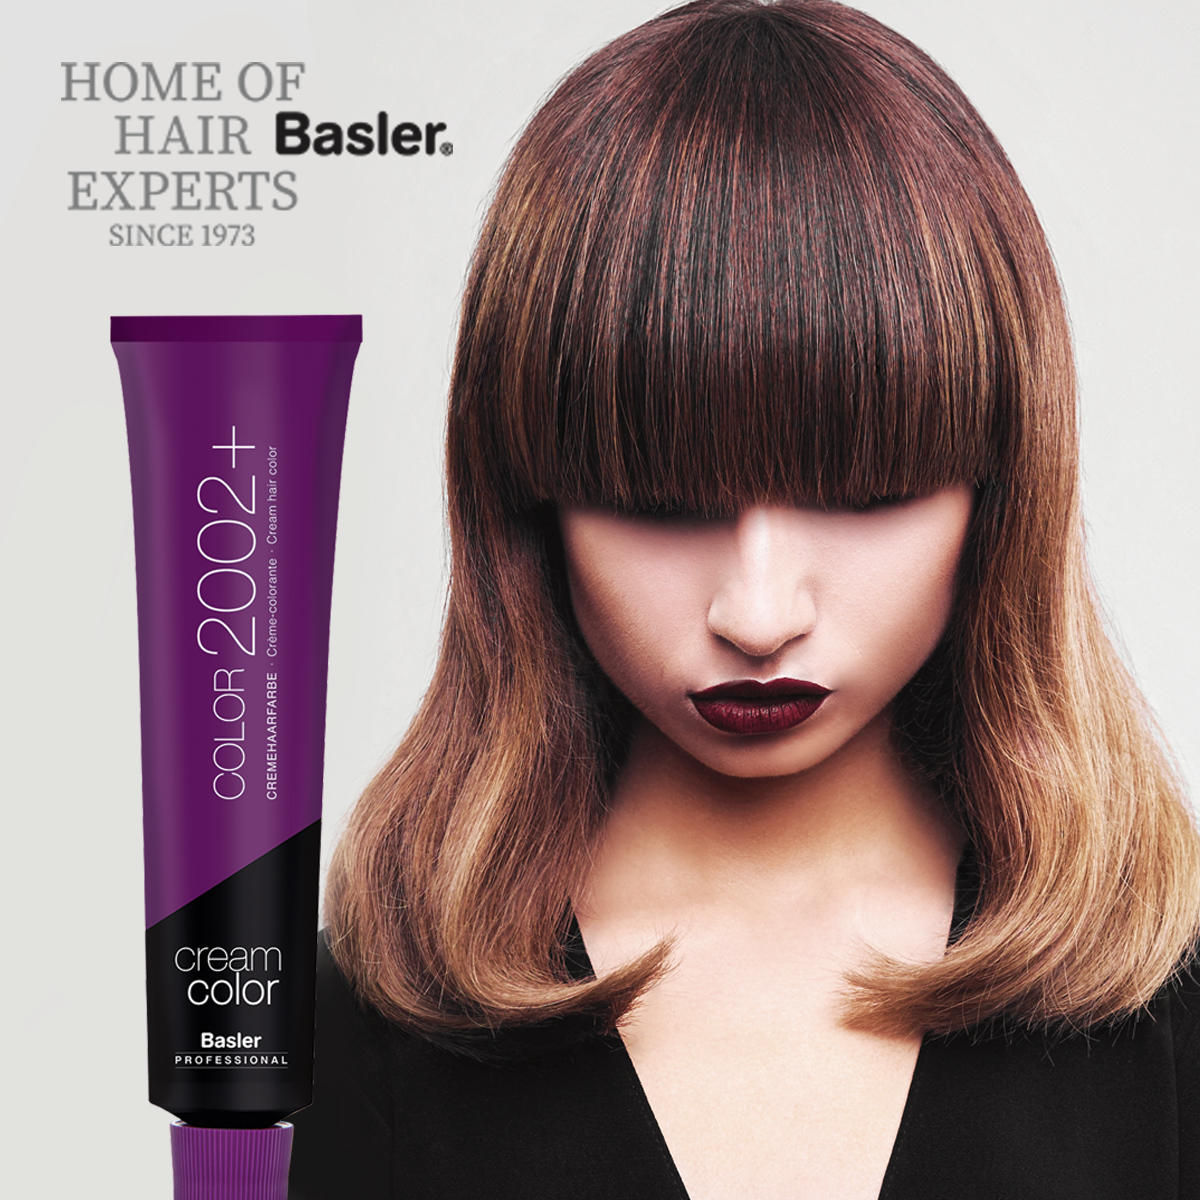 Basler cream hair colour 5/7 light brown brown - chestnut brown, tube 60 ml - 3